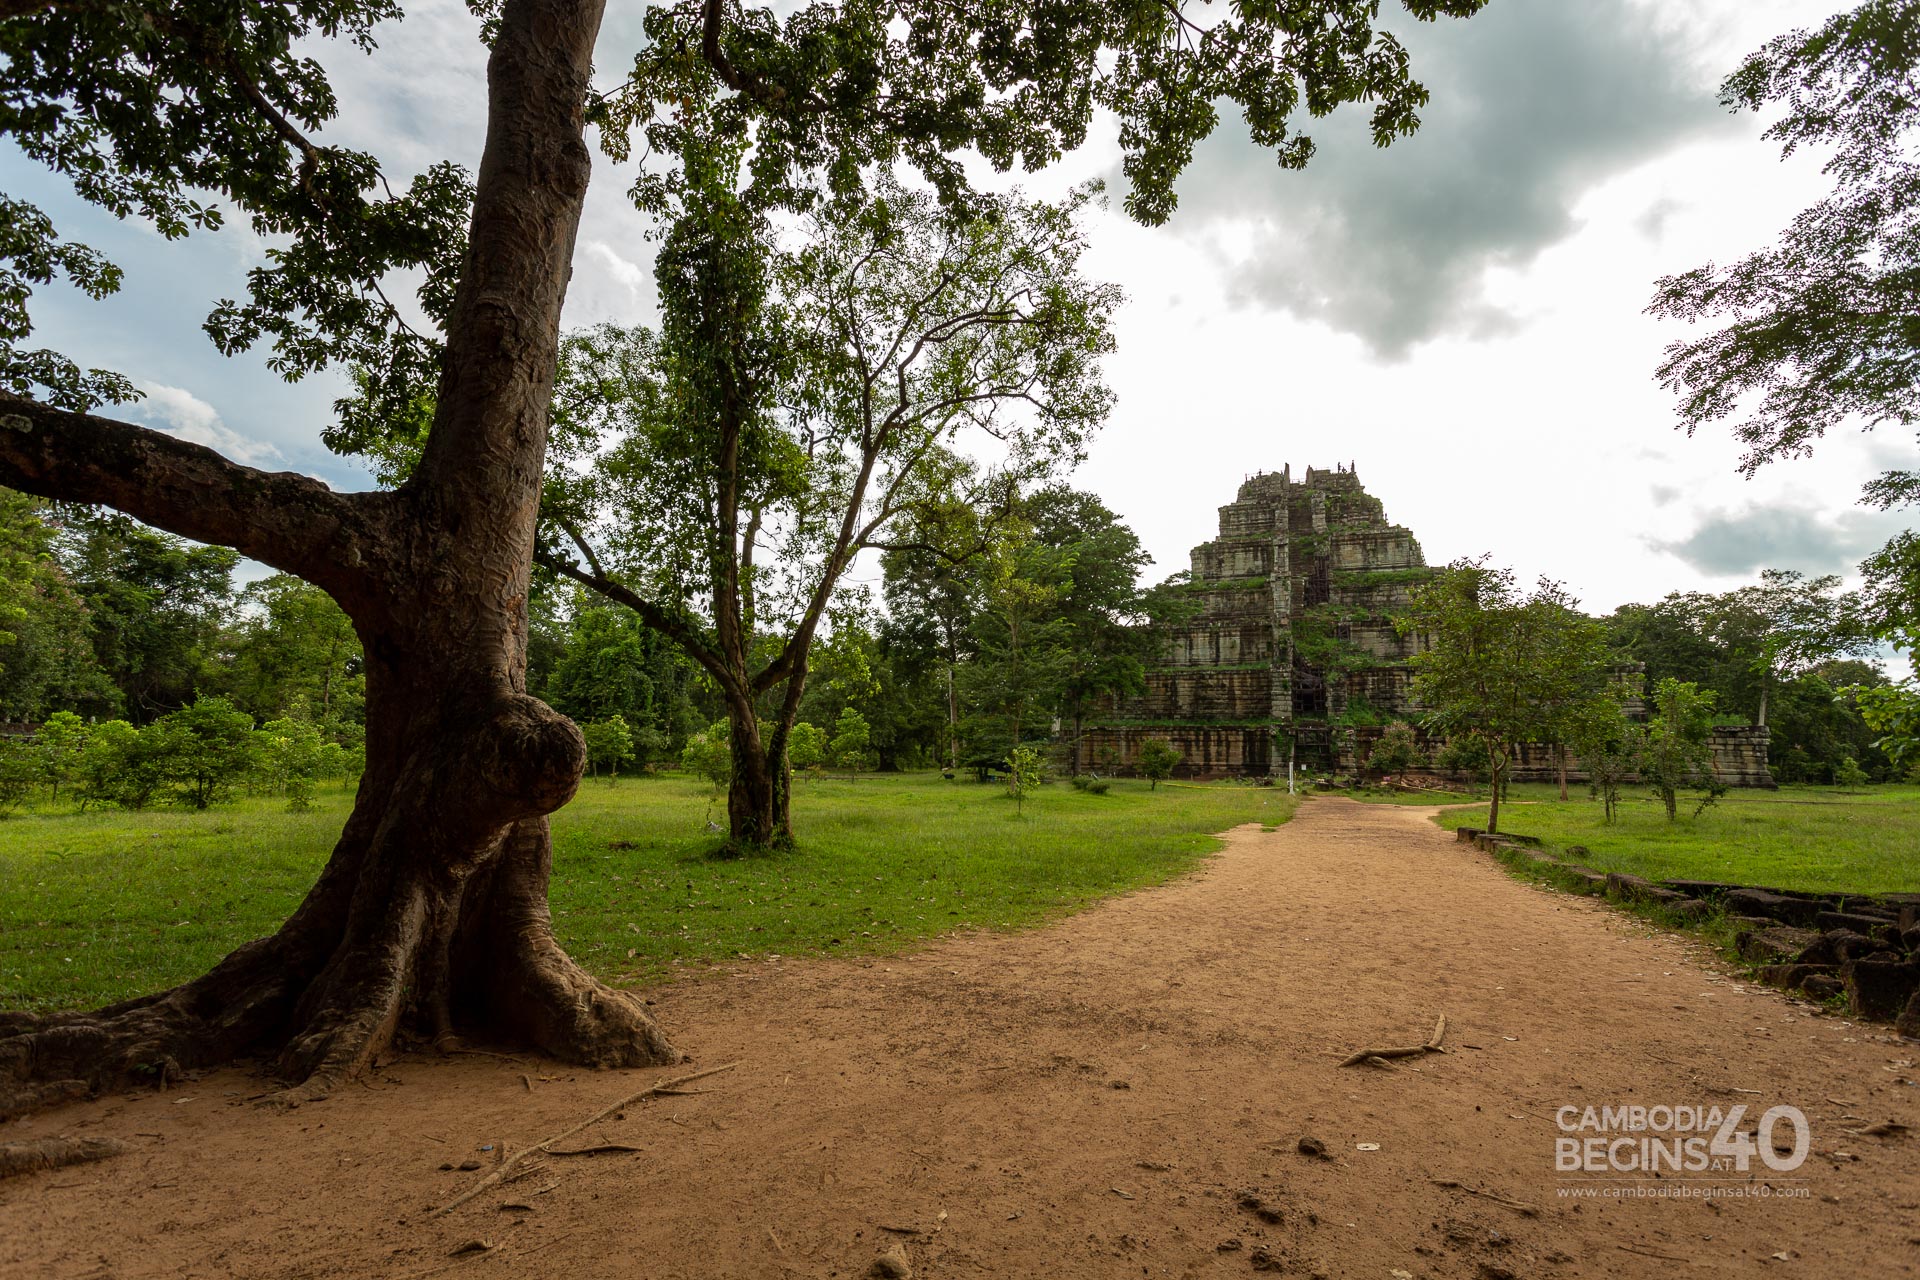 Beng Melea: Explore temples hidden in the jungles of Cambodia